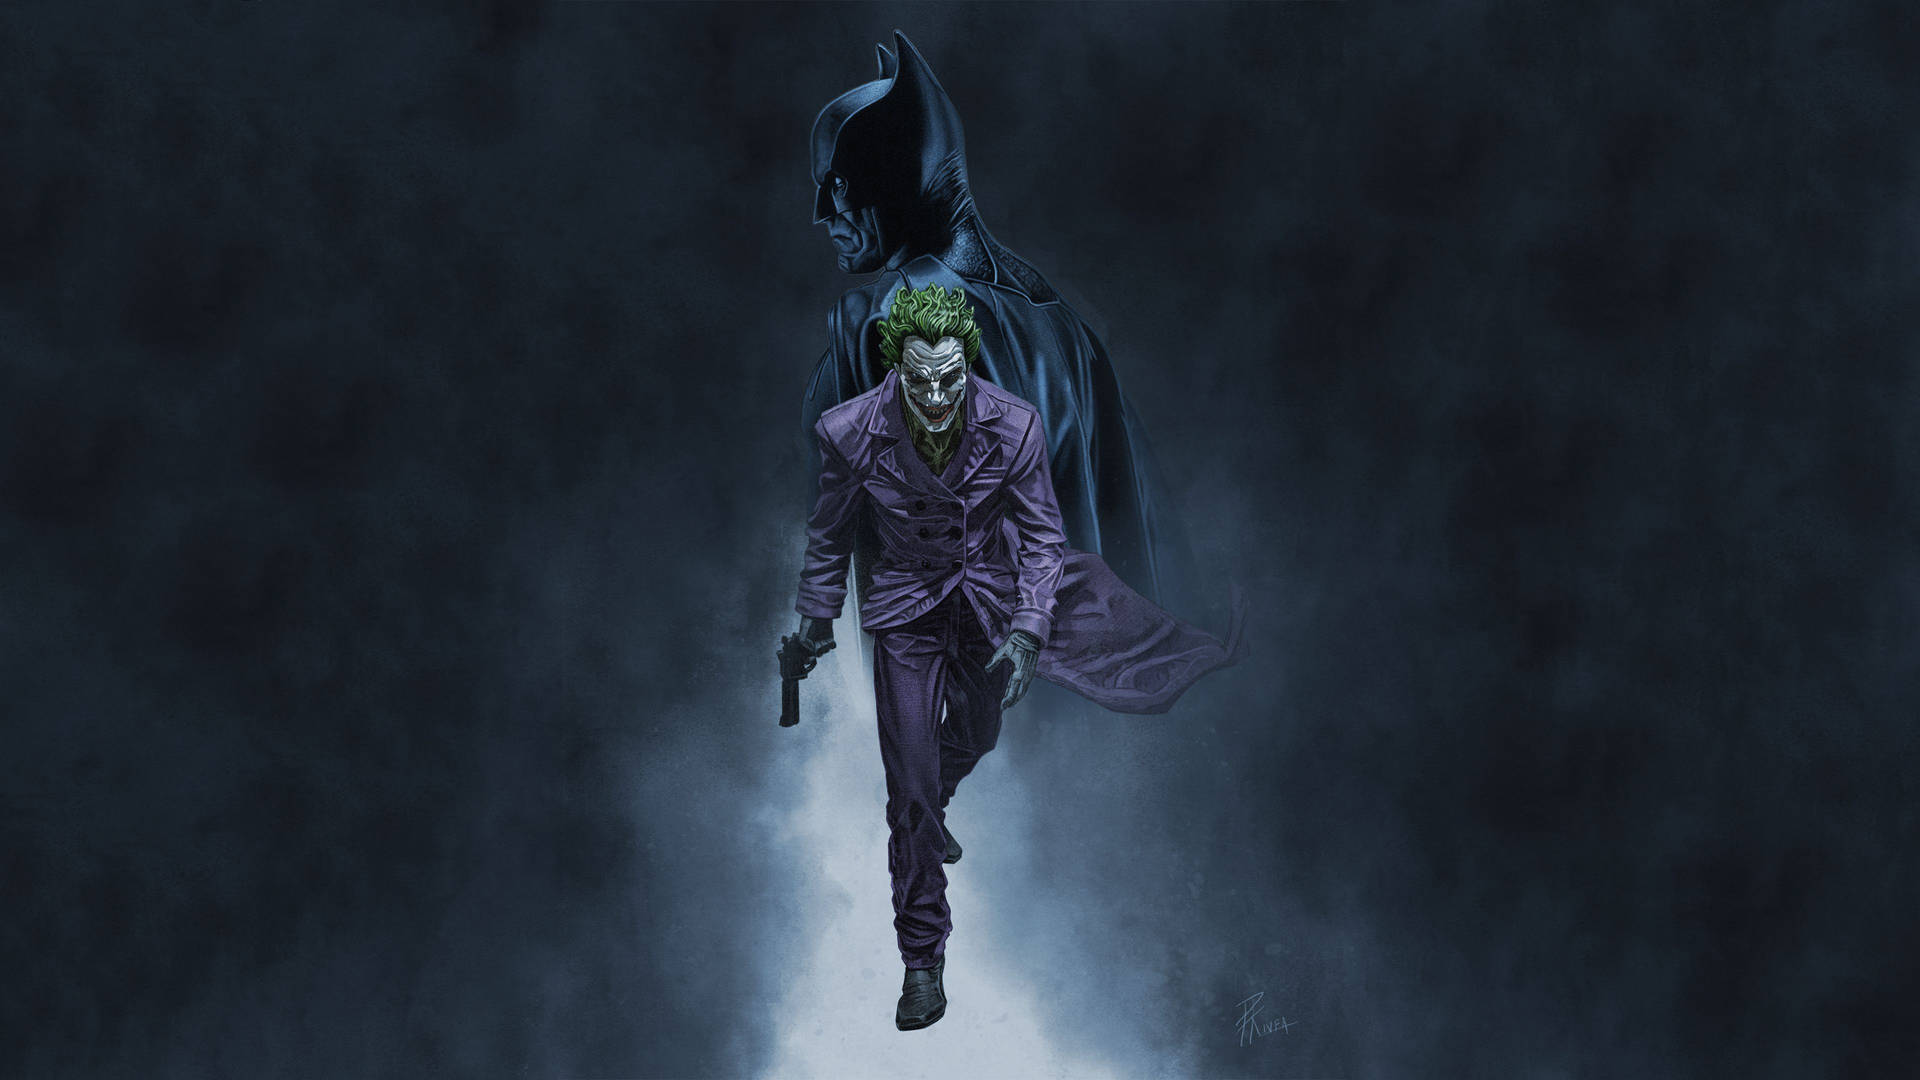 Black Ultra Hd Joker With Batman Looming Background